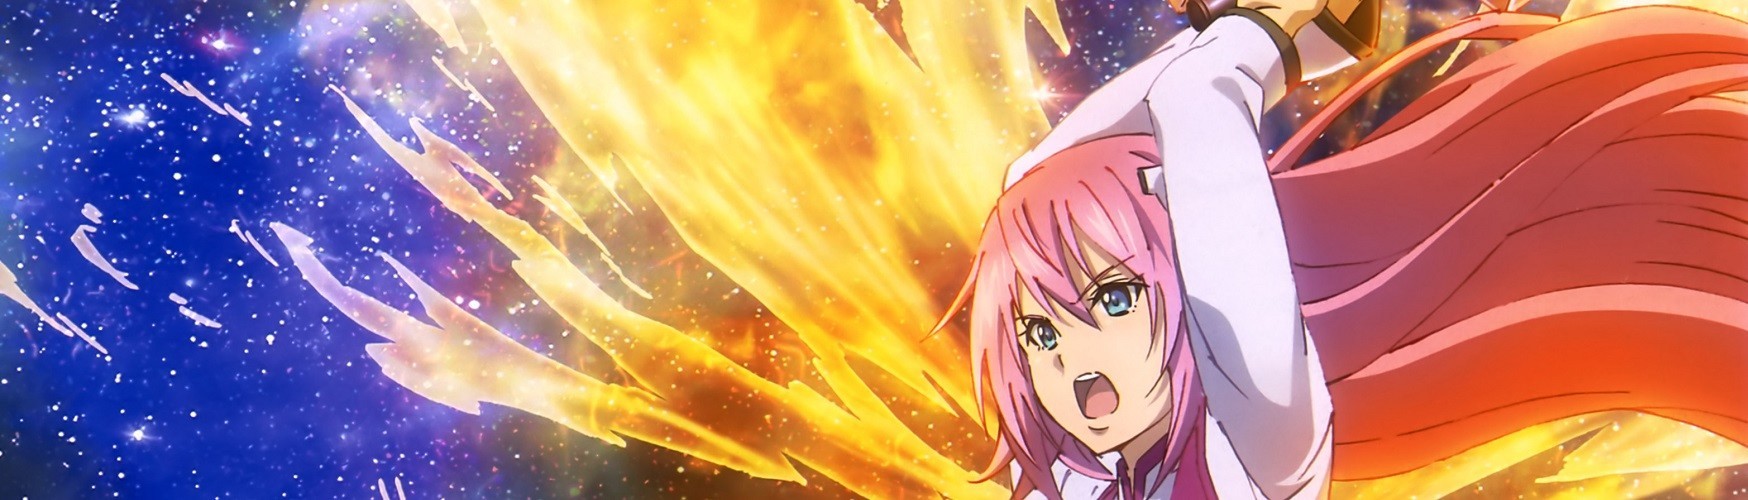 Anime Like The Asterisk War 2